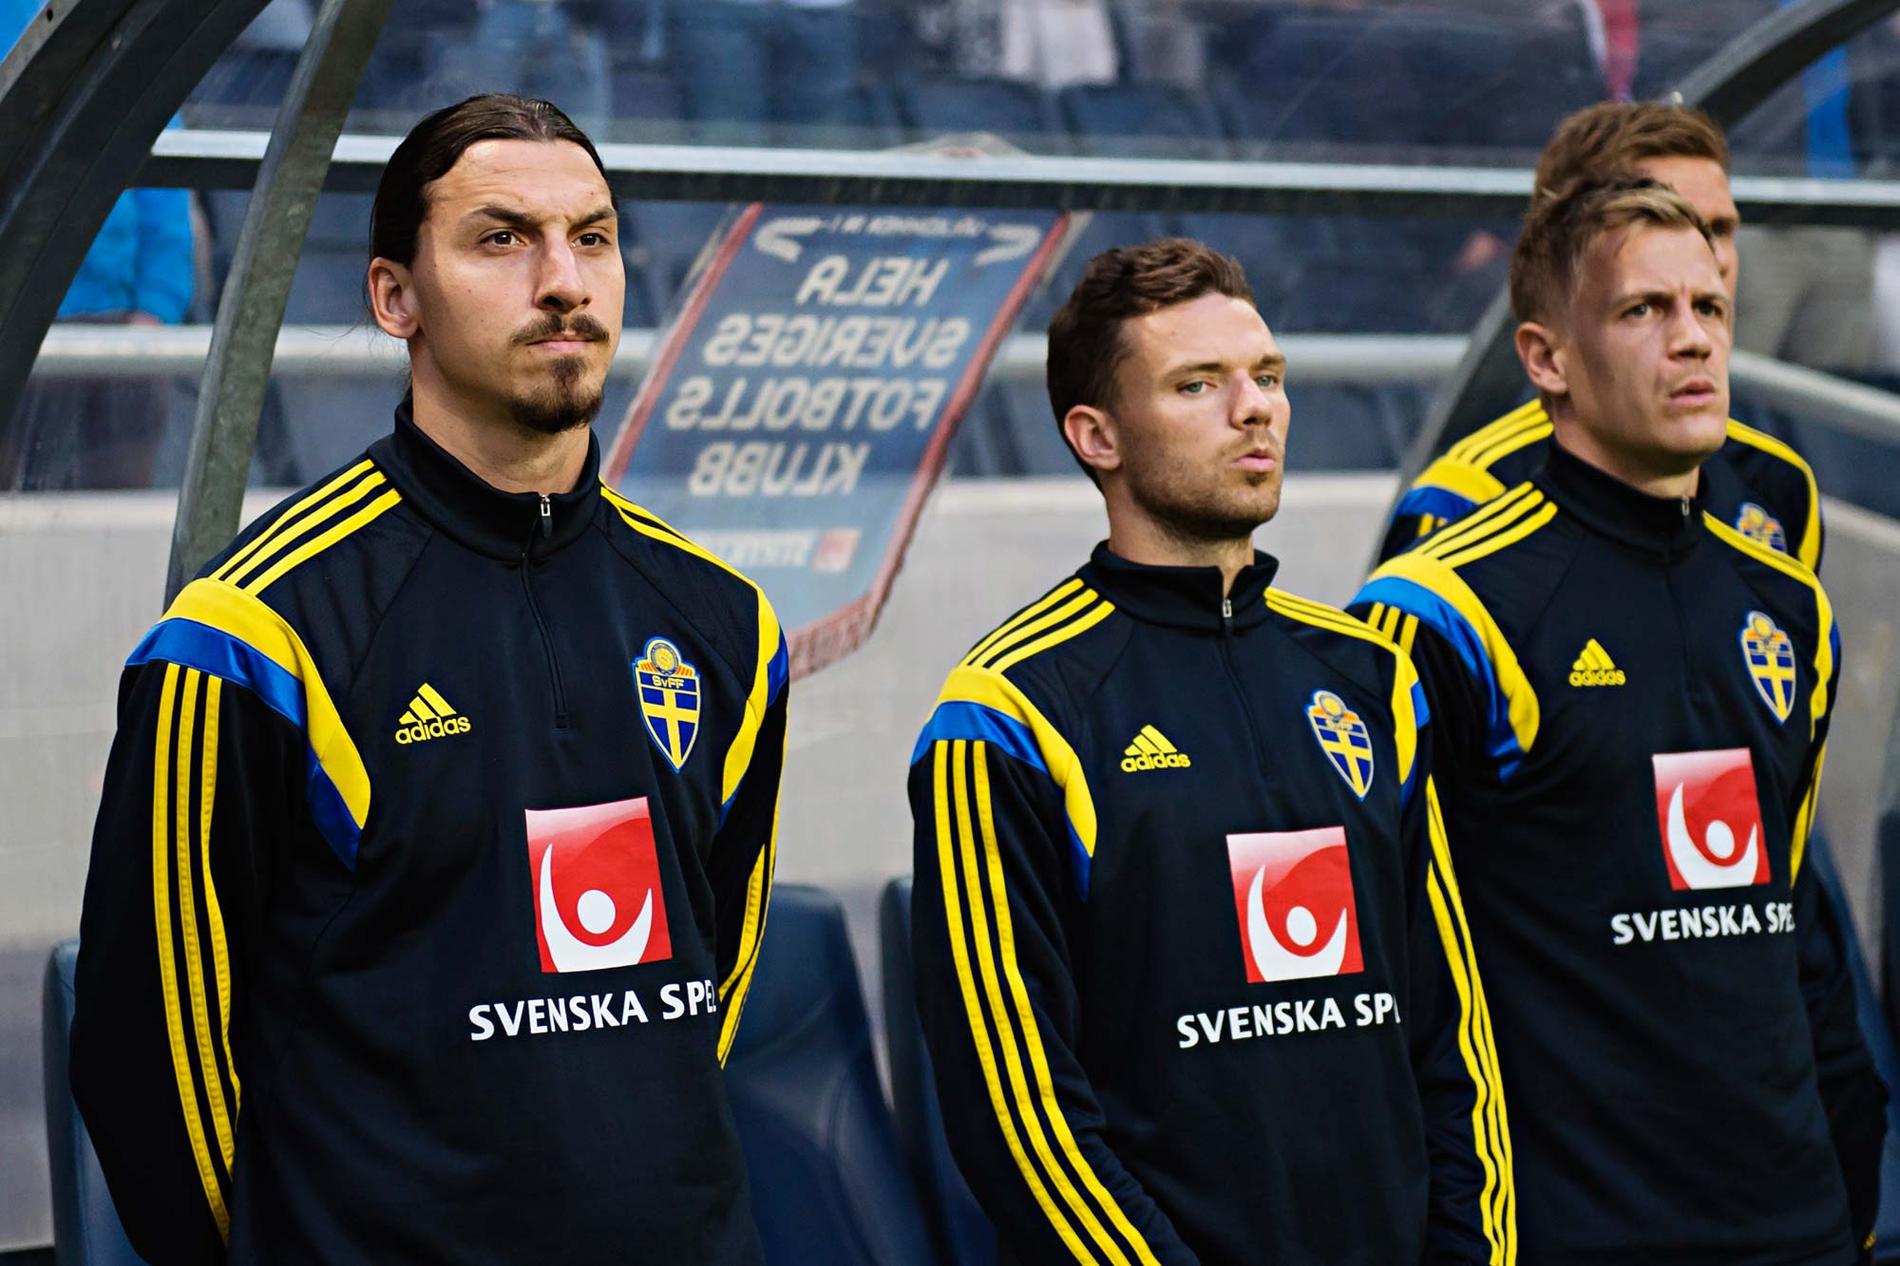 Sveriges lagkapten Zlatan Ibrahimovic kan se fram emot sitt sista? mästerskap med landslaget 2016, enligt oddsen.